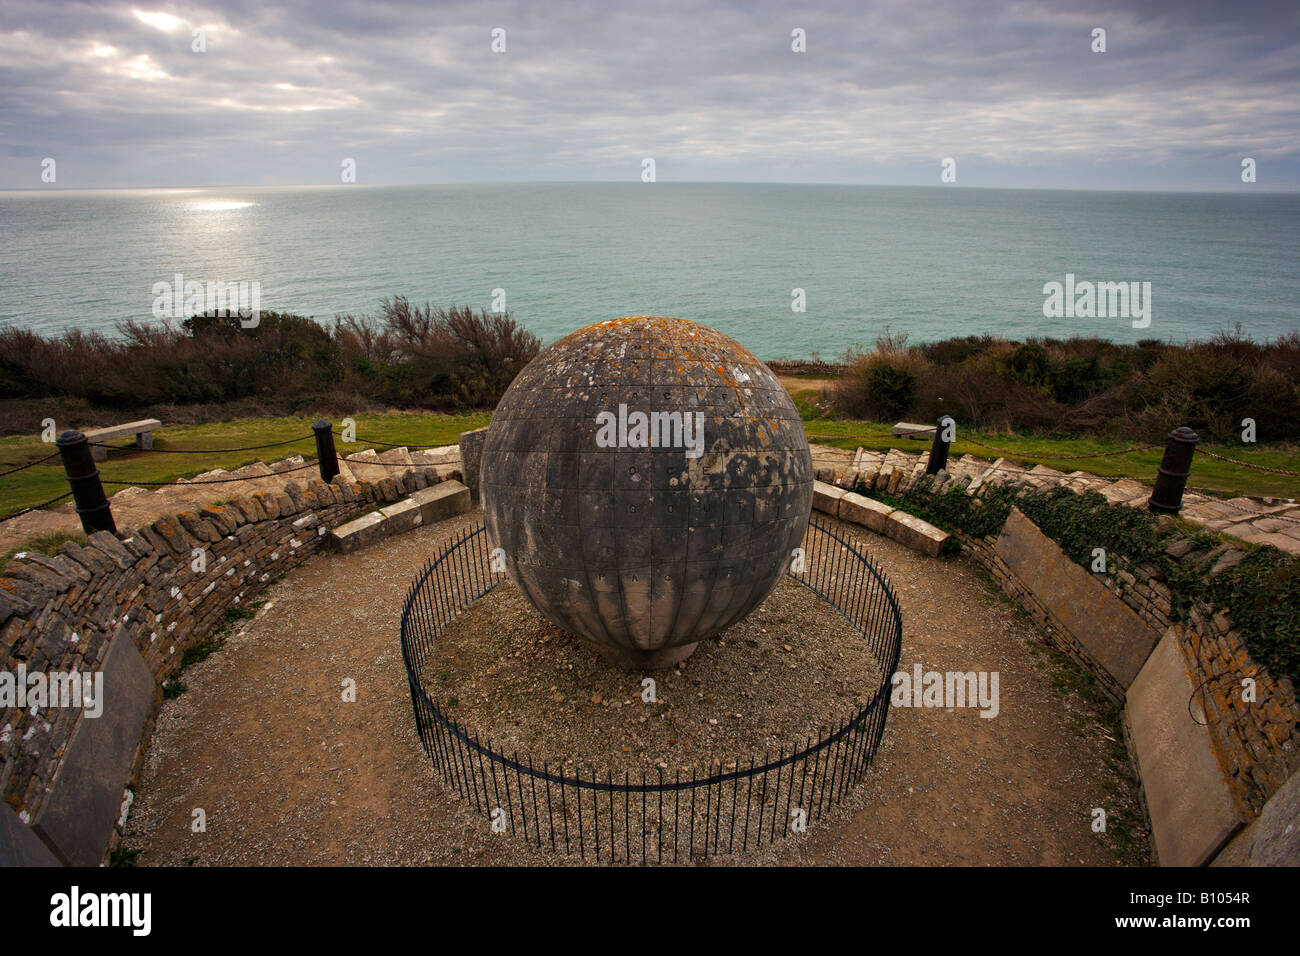 The Globe at Durlston Country Park, Swanage, Dorset, UK Stock Photo